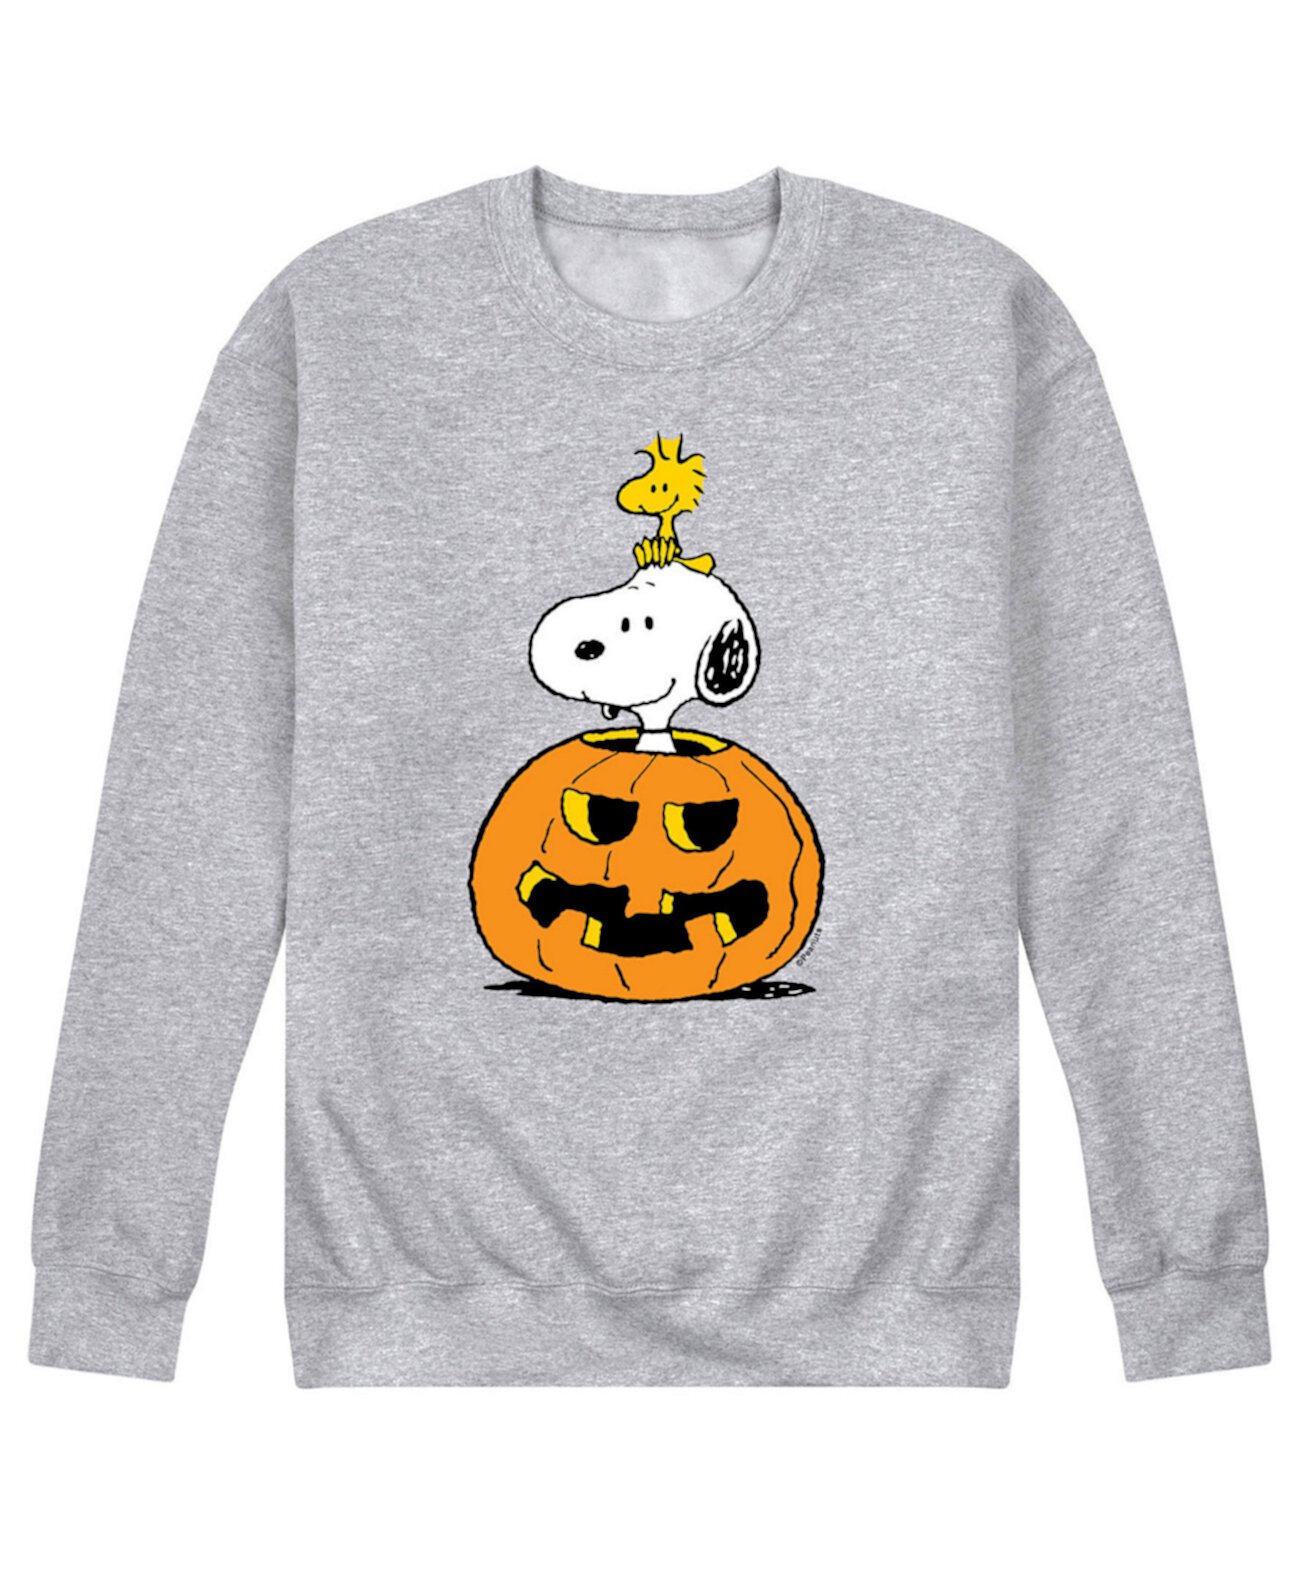 Мужская флисовая футболка Peanuts Snoopy Pumpkin AIRWAVES